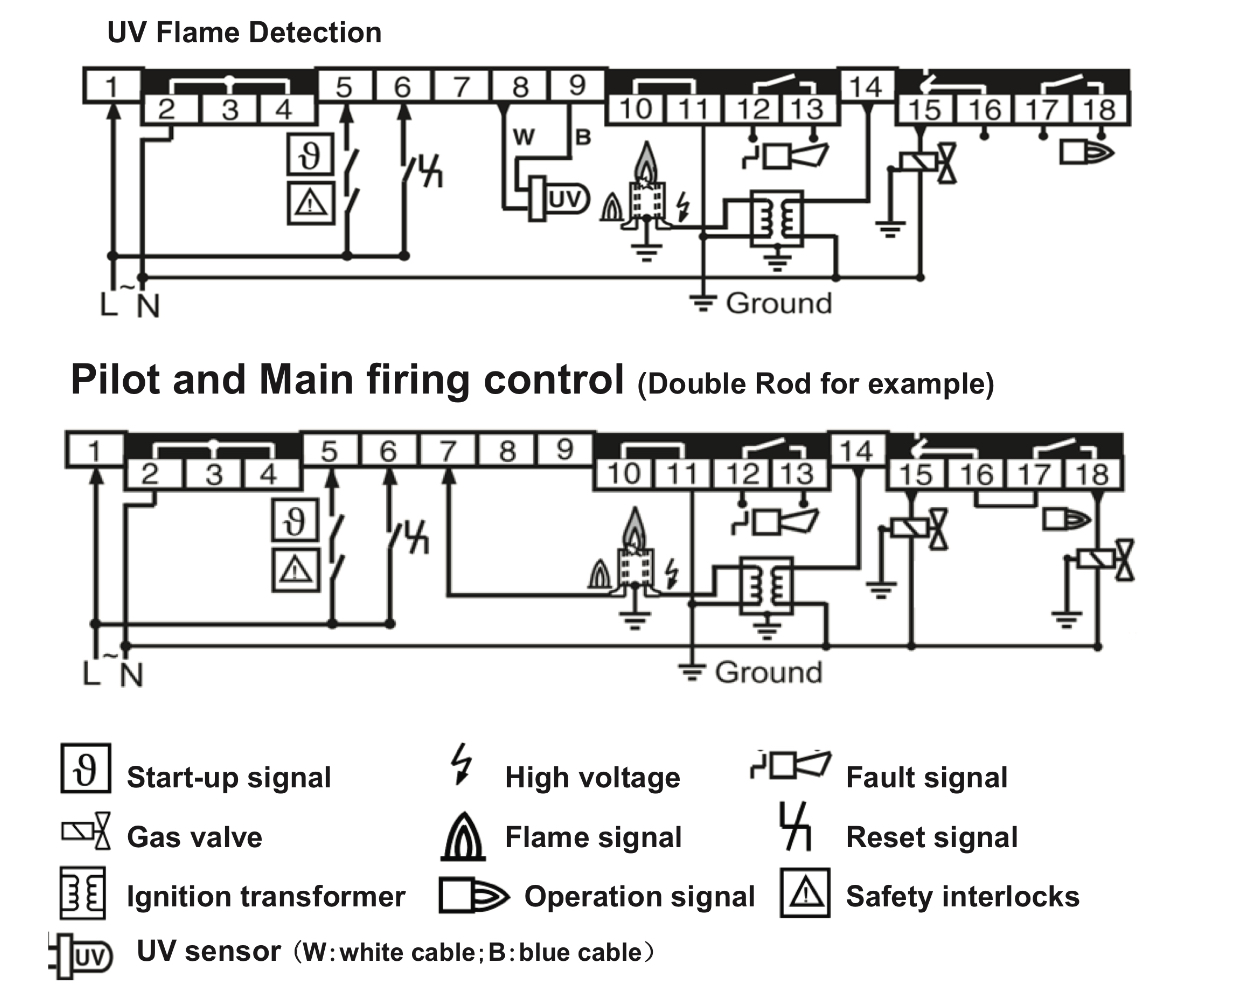 TBC2800A1000 Burner Controller Wiring Diagram